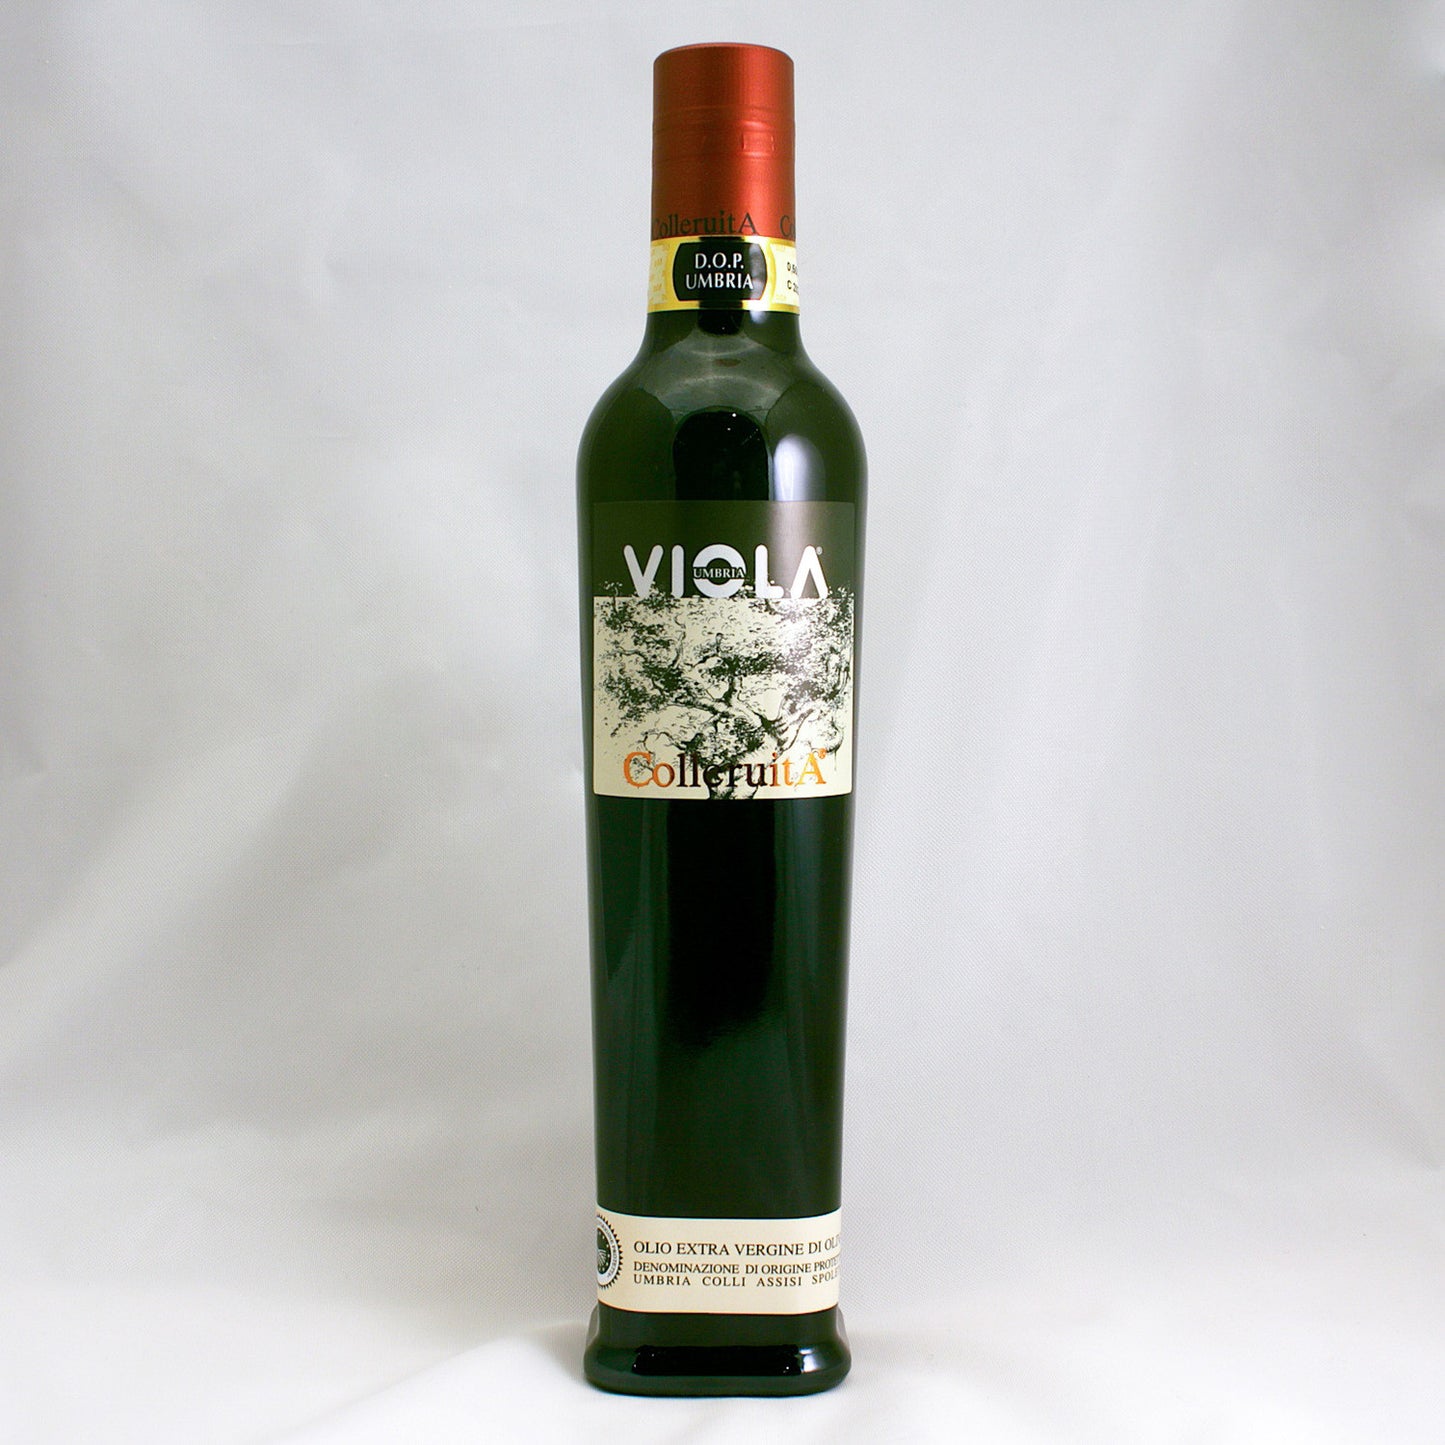 Viola Colleruita - Extra Virgin Olive Oil